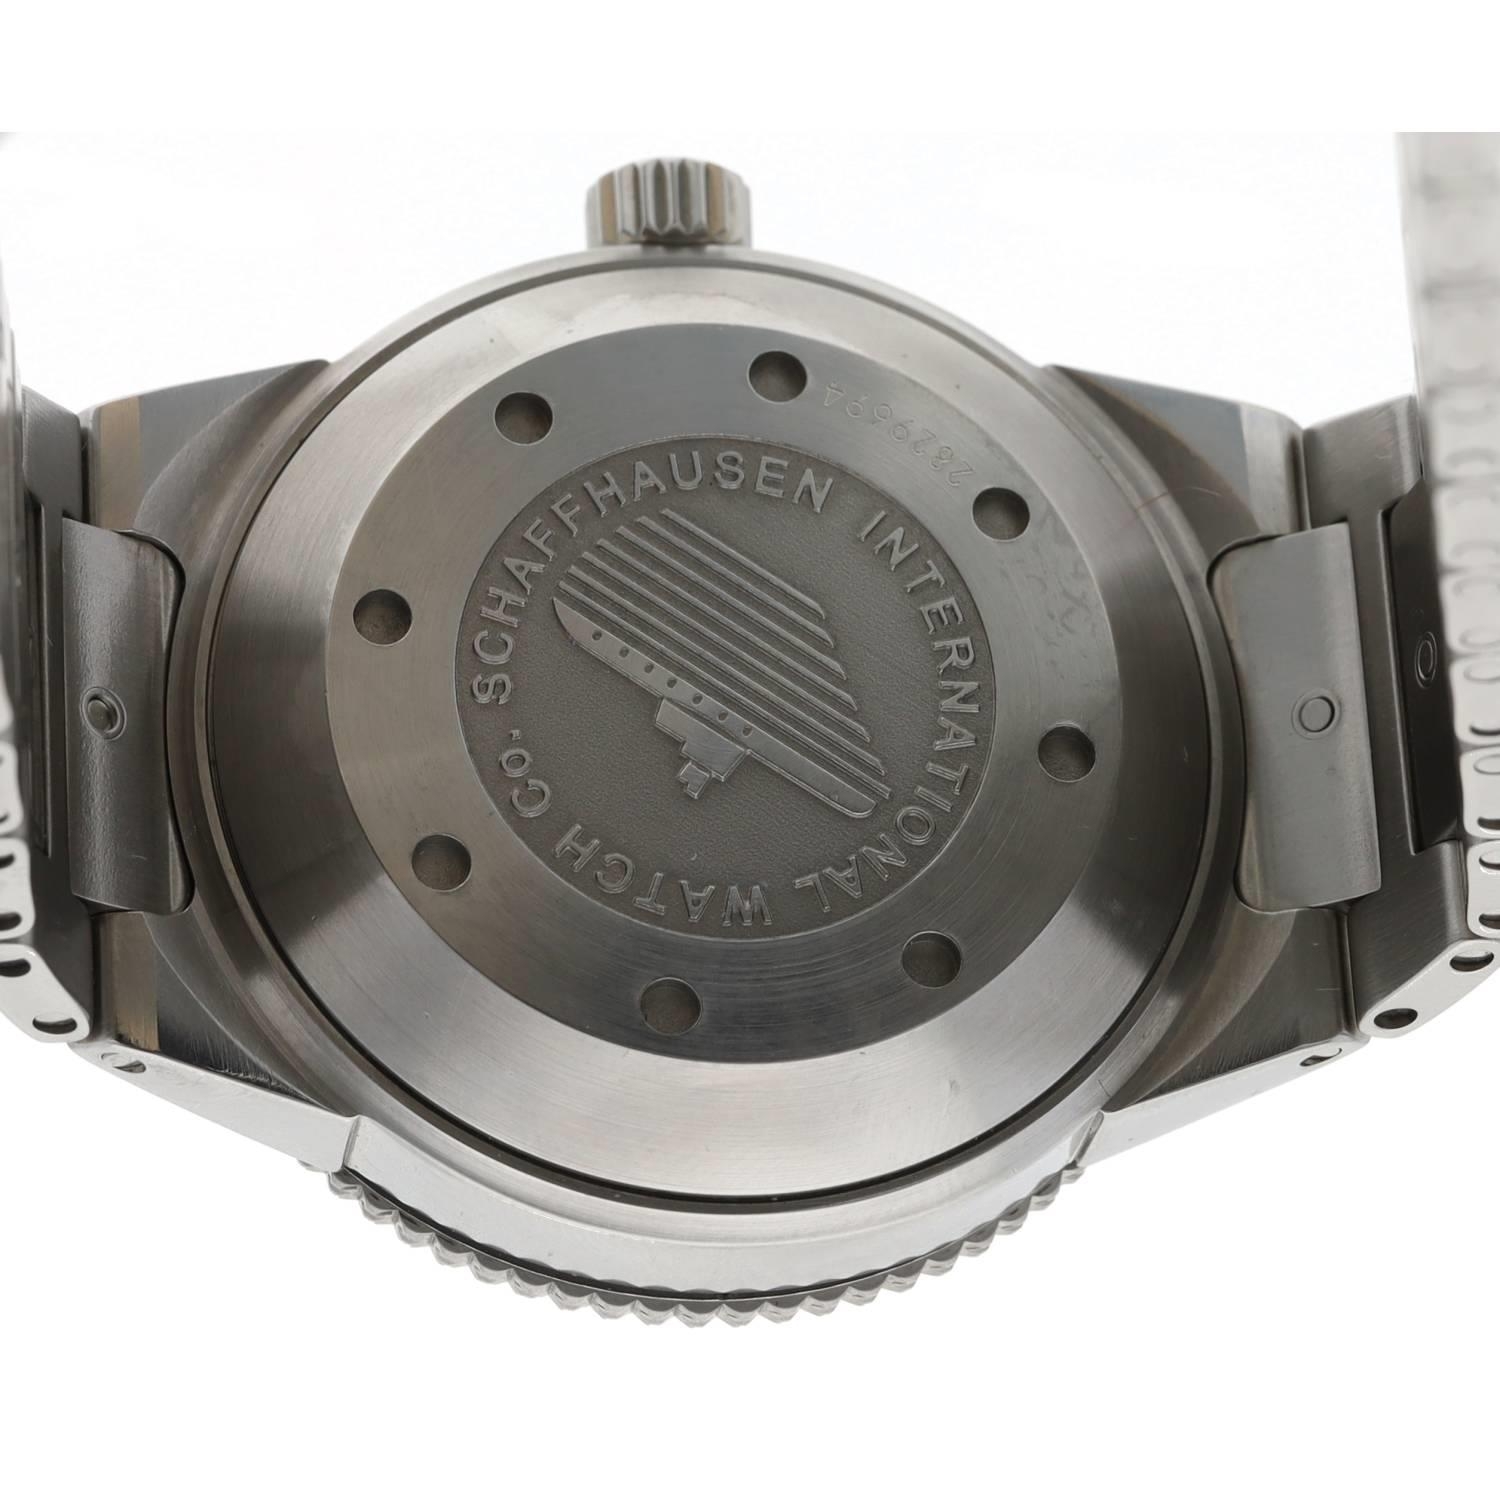 IWC (International Watch Company) Aquatimer GST 2000M automatic stainless steel gentleman's - Image 4 of 4